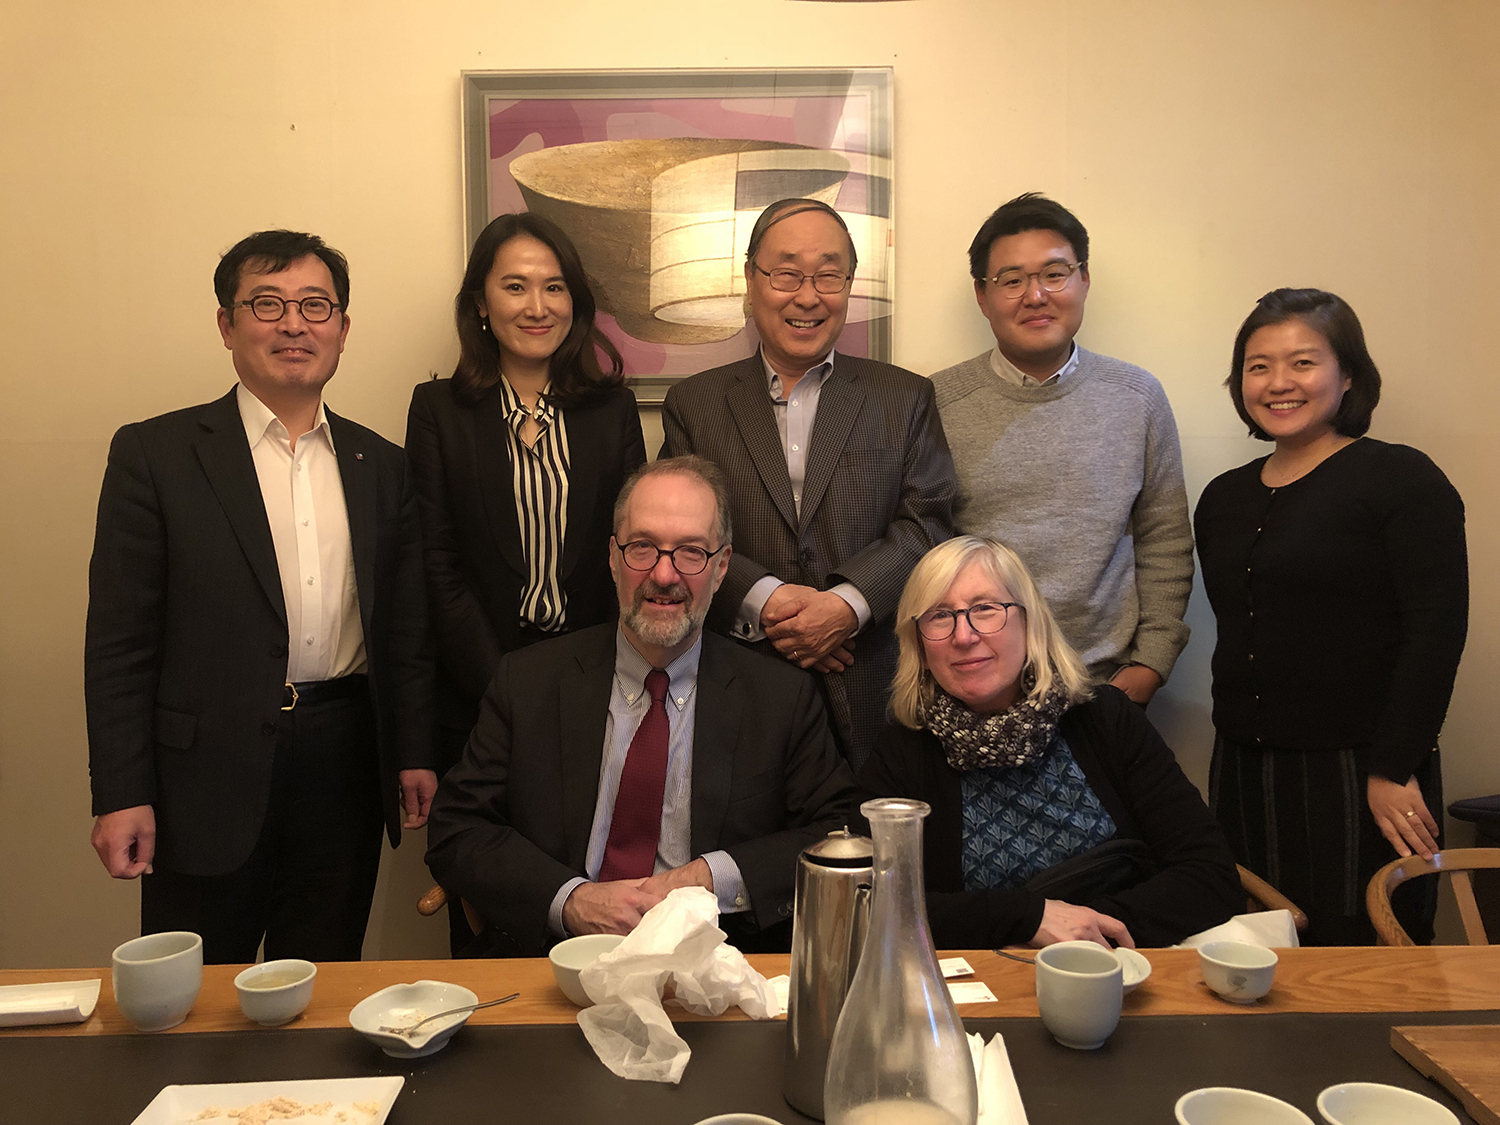 Dean Weil meeting with alumni in Seoul